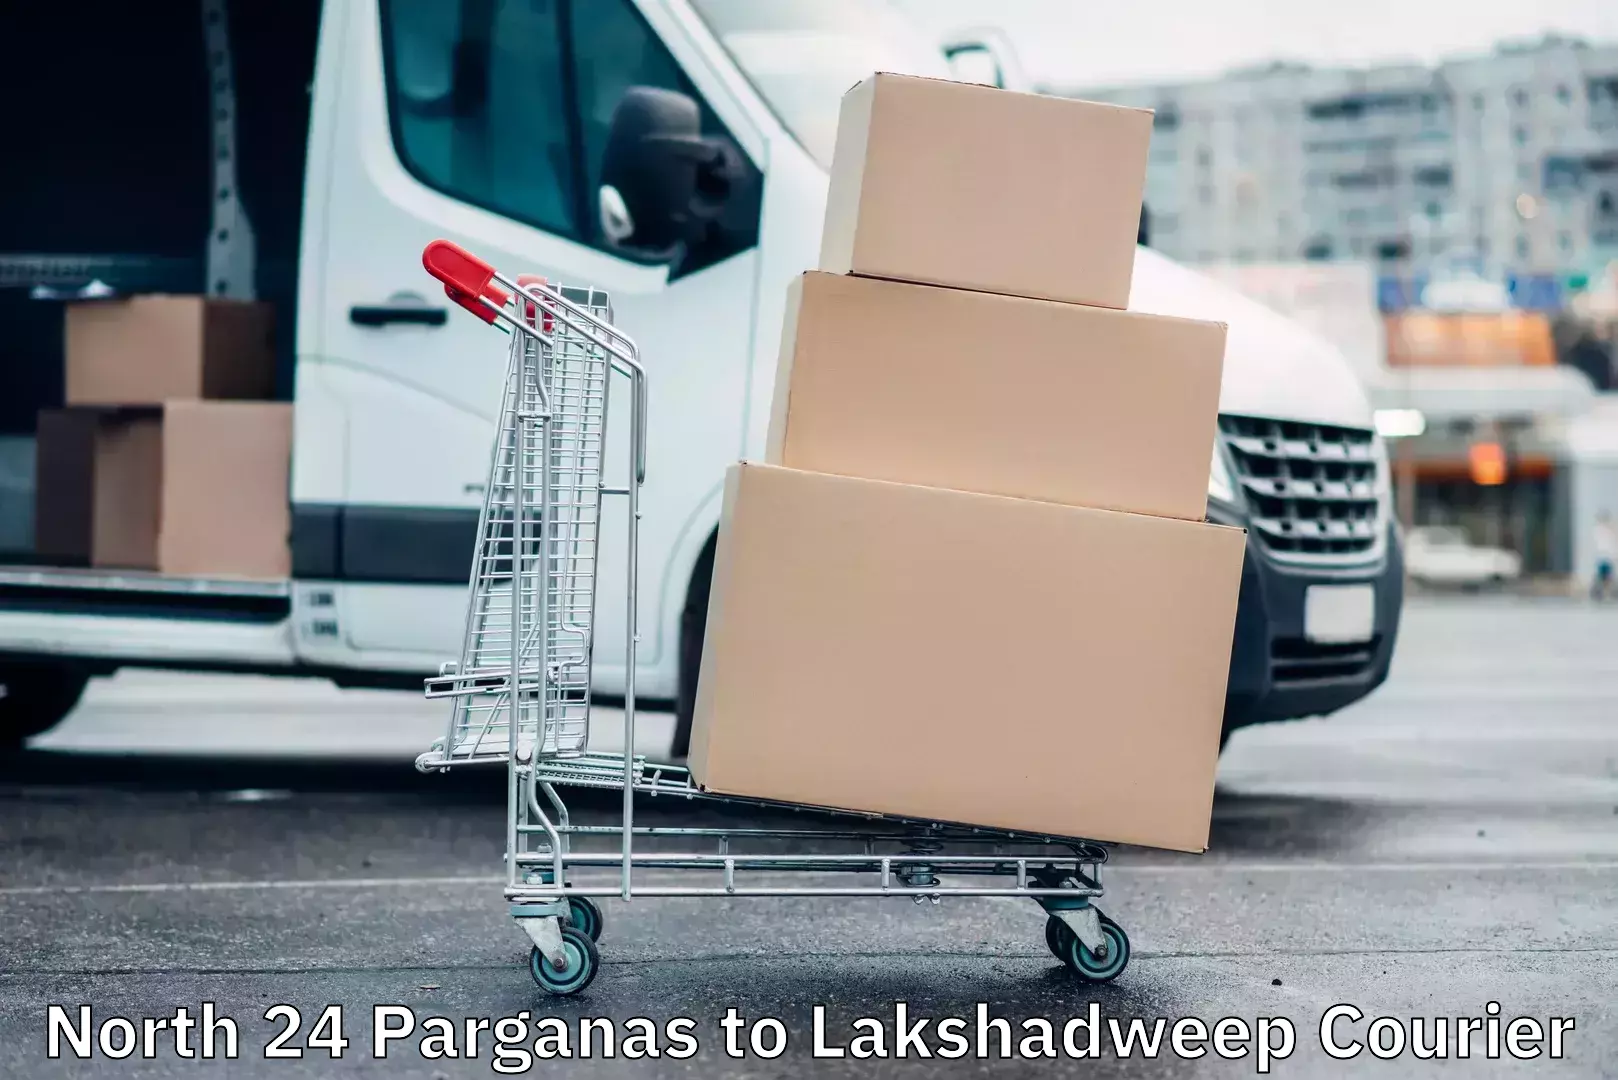 Weekend courier service North 24 Parganas to Lakshadweep